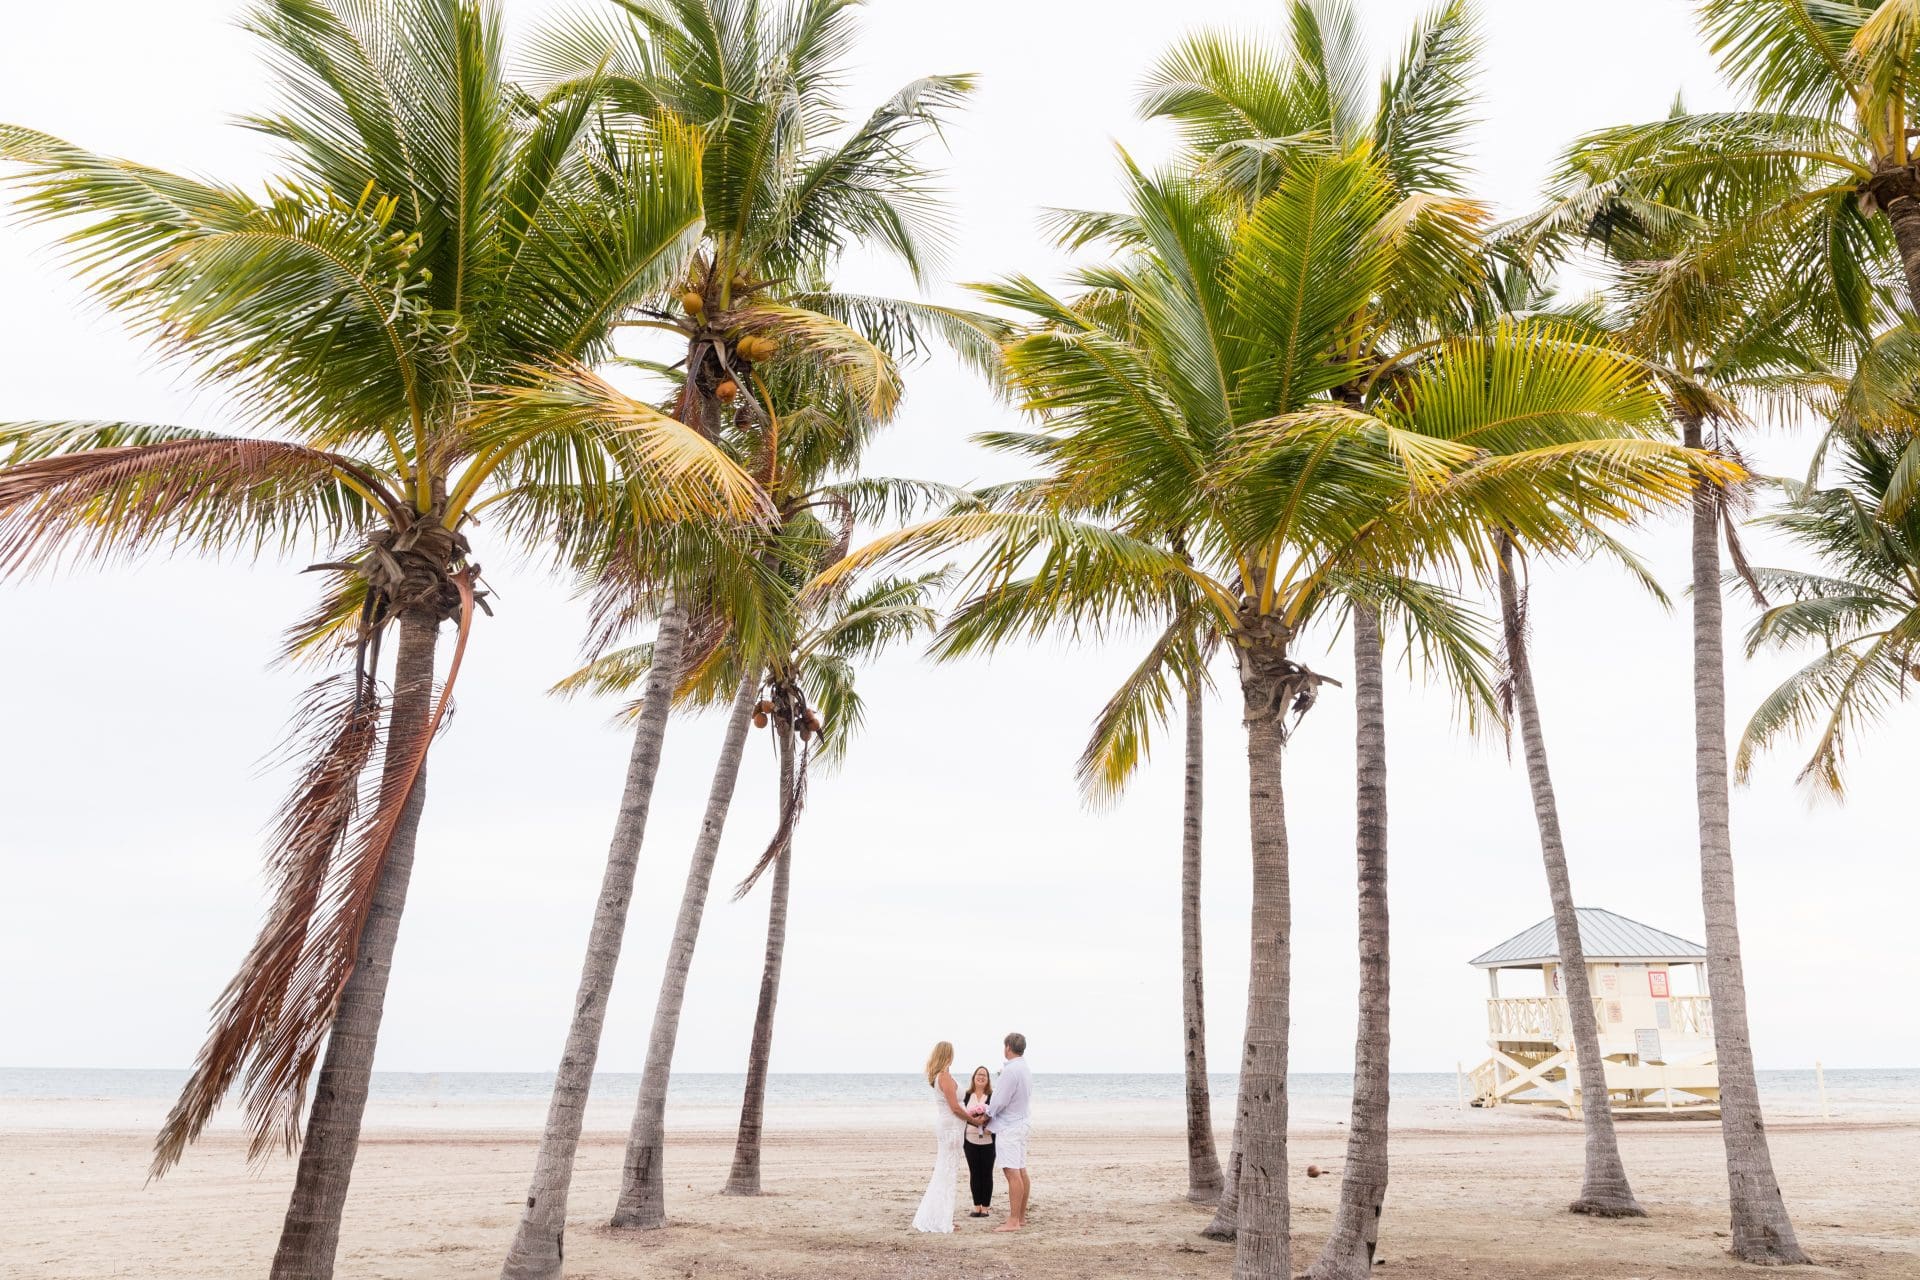 Small Miami Weddings Elopement In Florida Micro Weddings Covid | Small